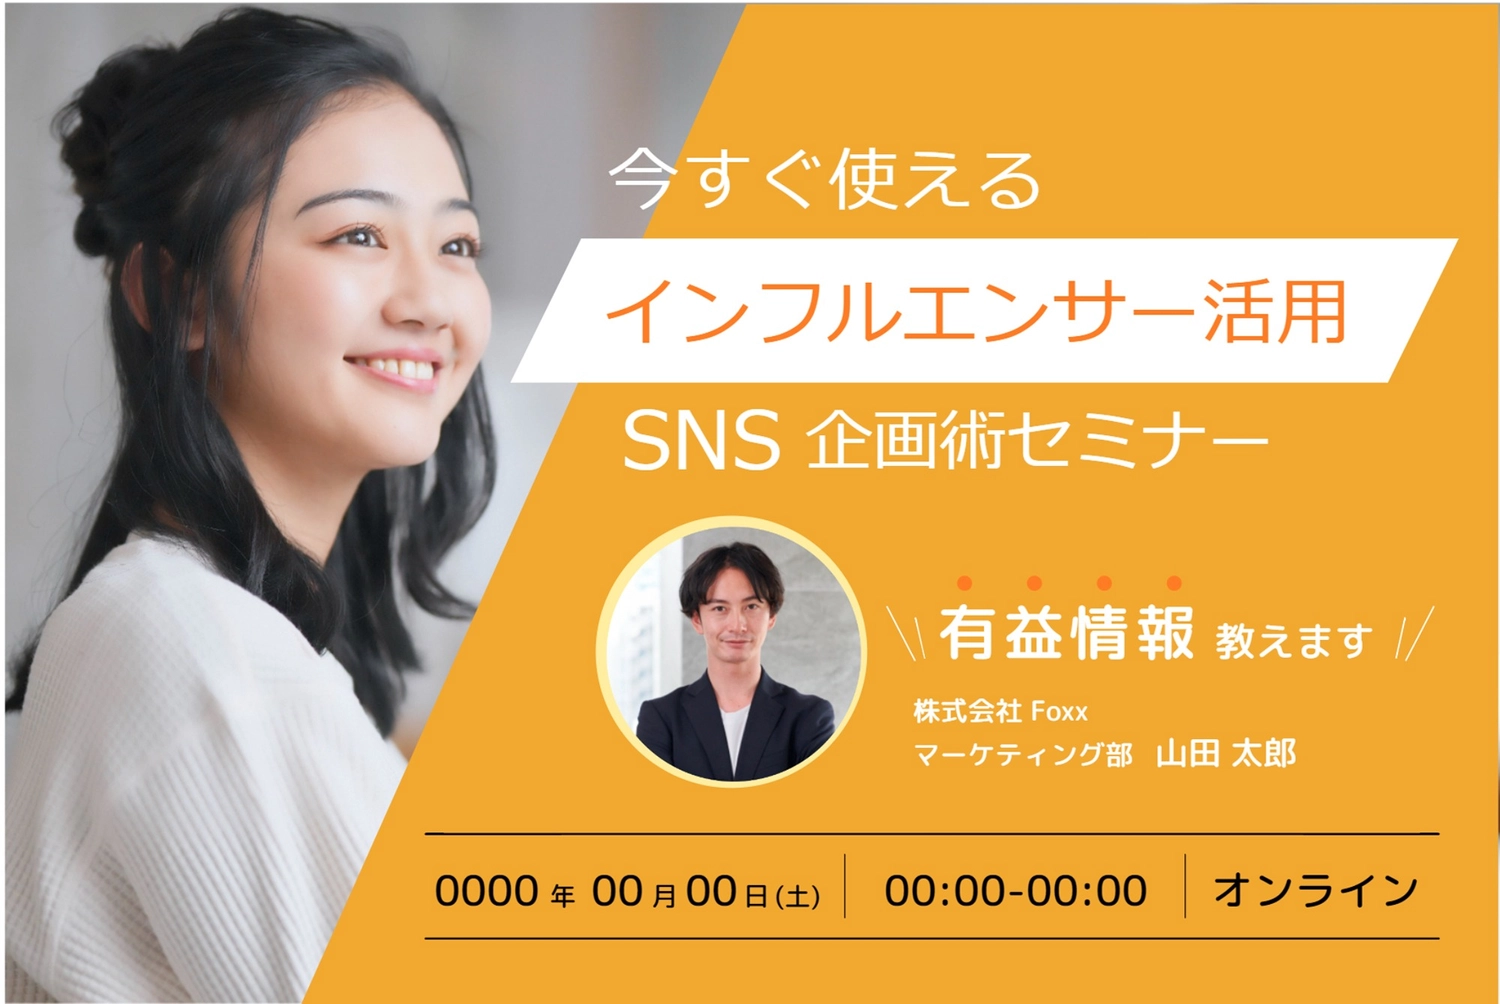 SNS企画術セミナー, online, influencer, guidance, Banner template